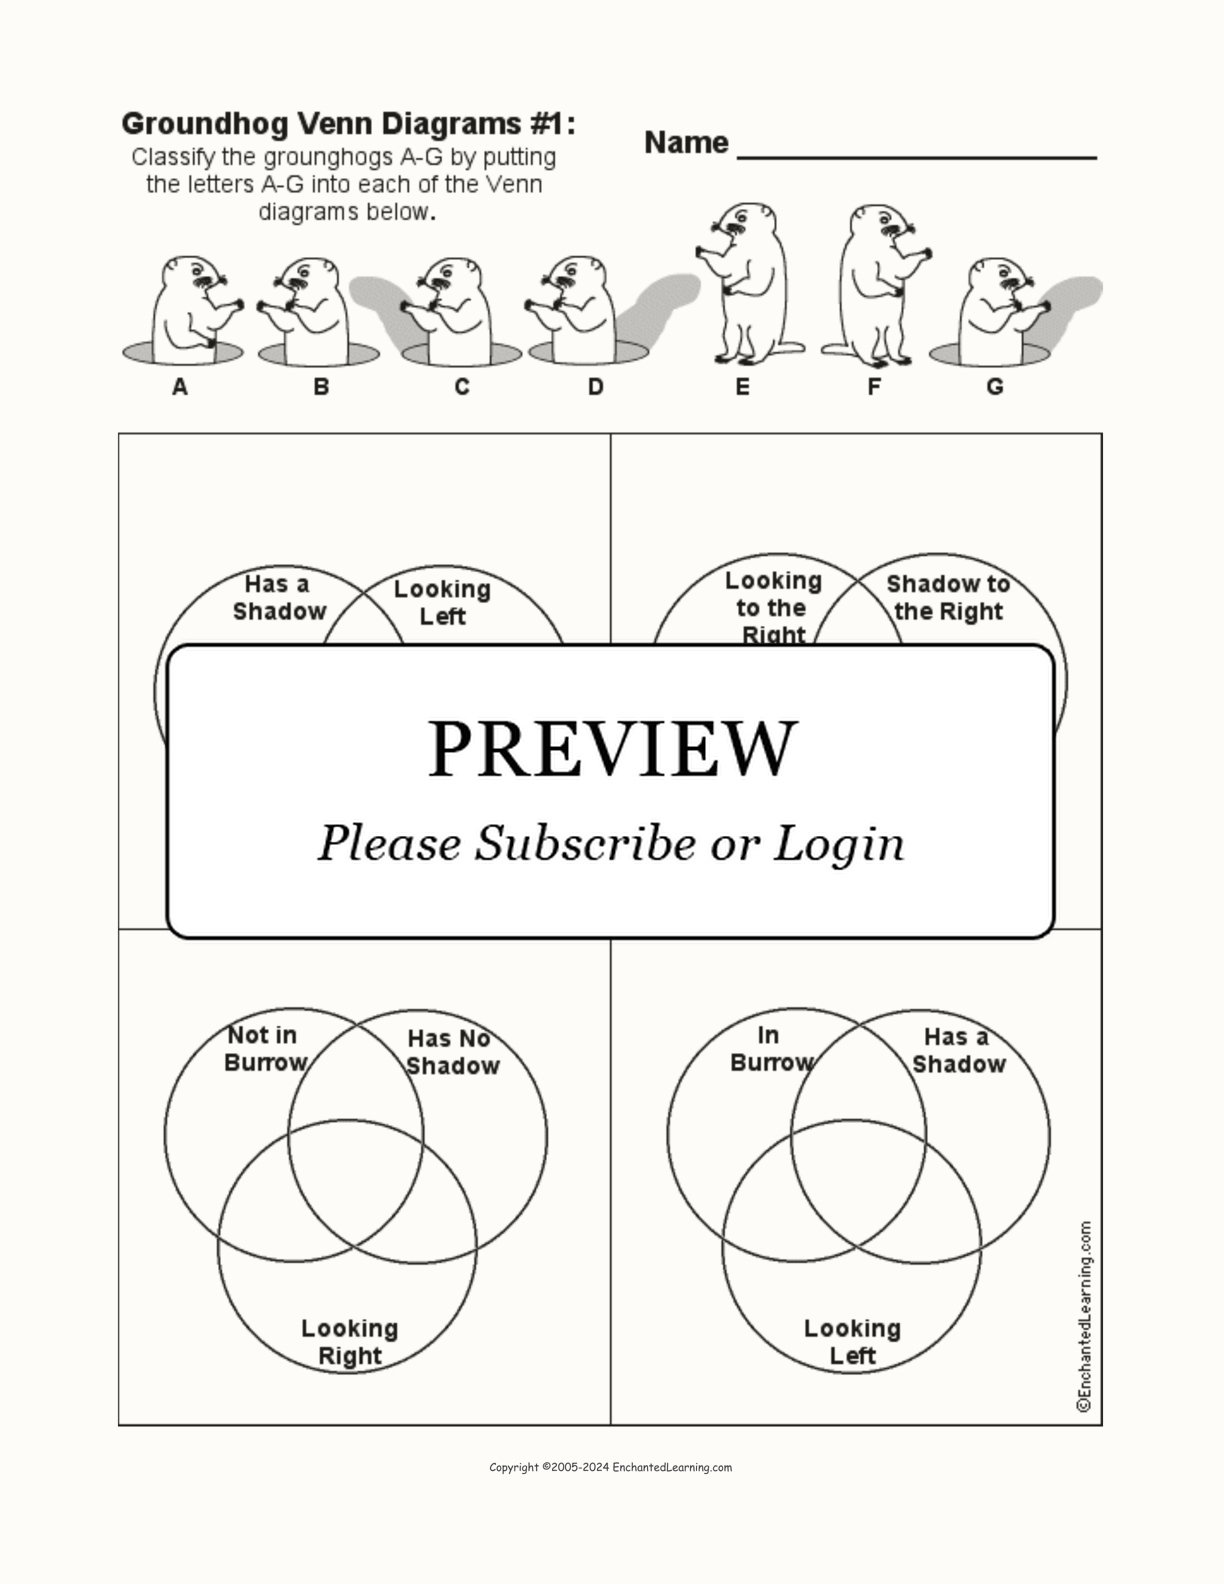 Groundhog Venn Diagrams #1 interactive worksheet page 1